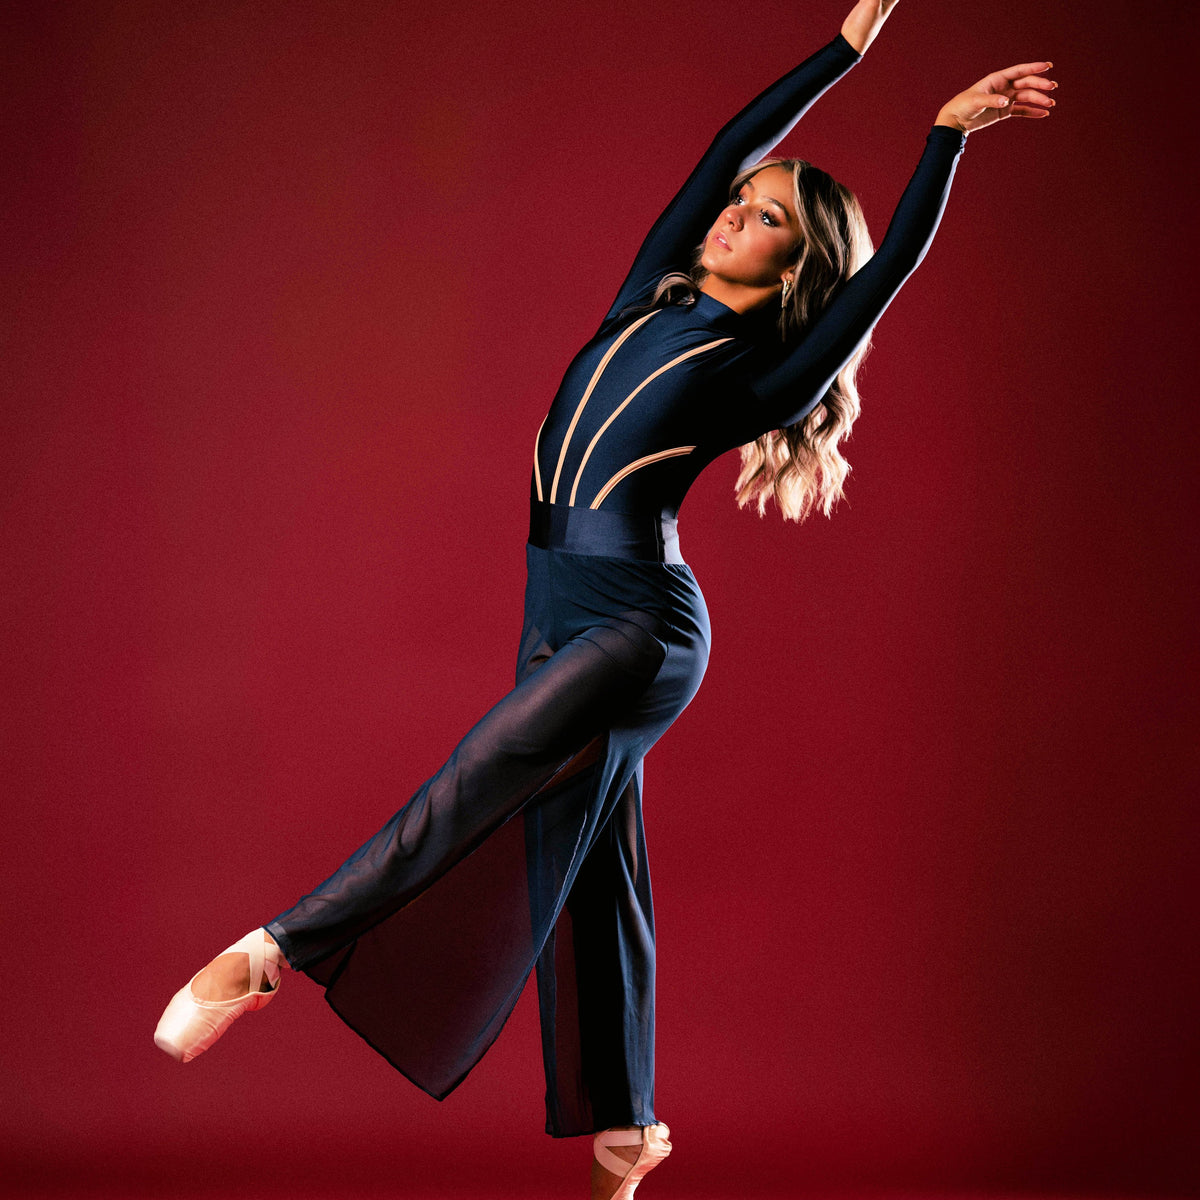 Girls High Cut Ballet Dance Briefs Dancing Bottoms Gymnastic Athletic  Dancewear